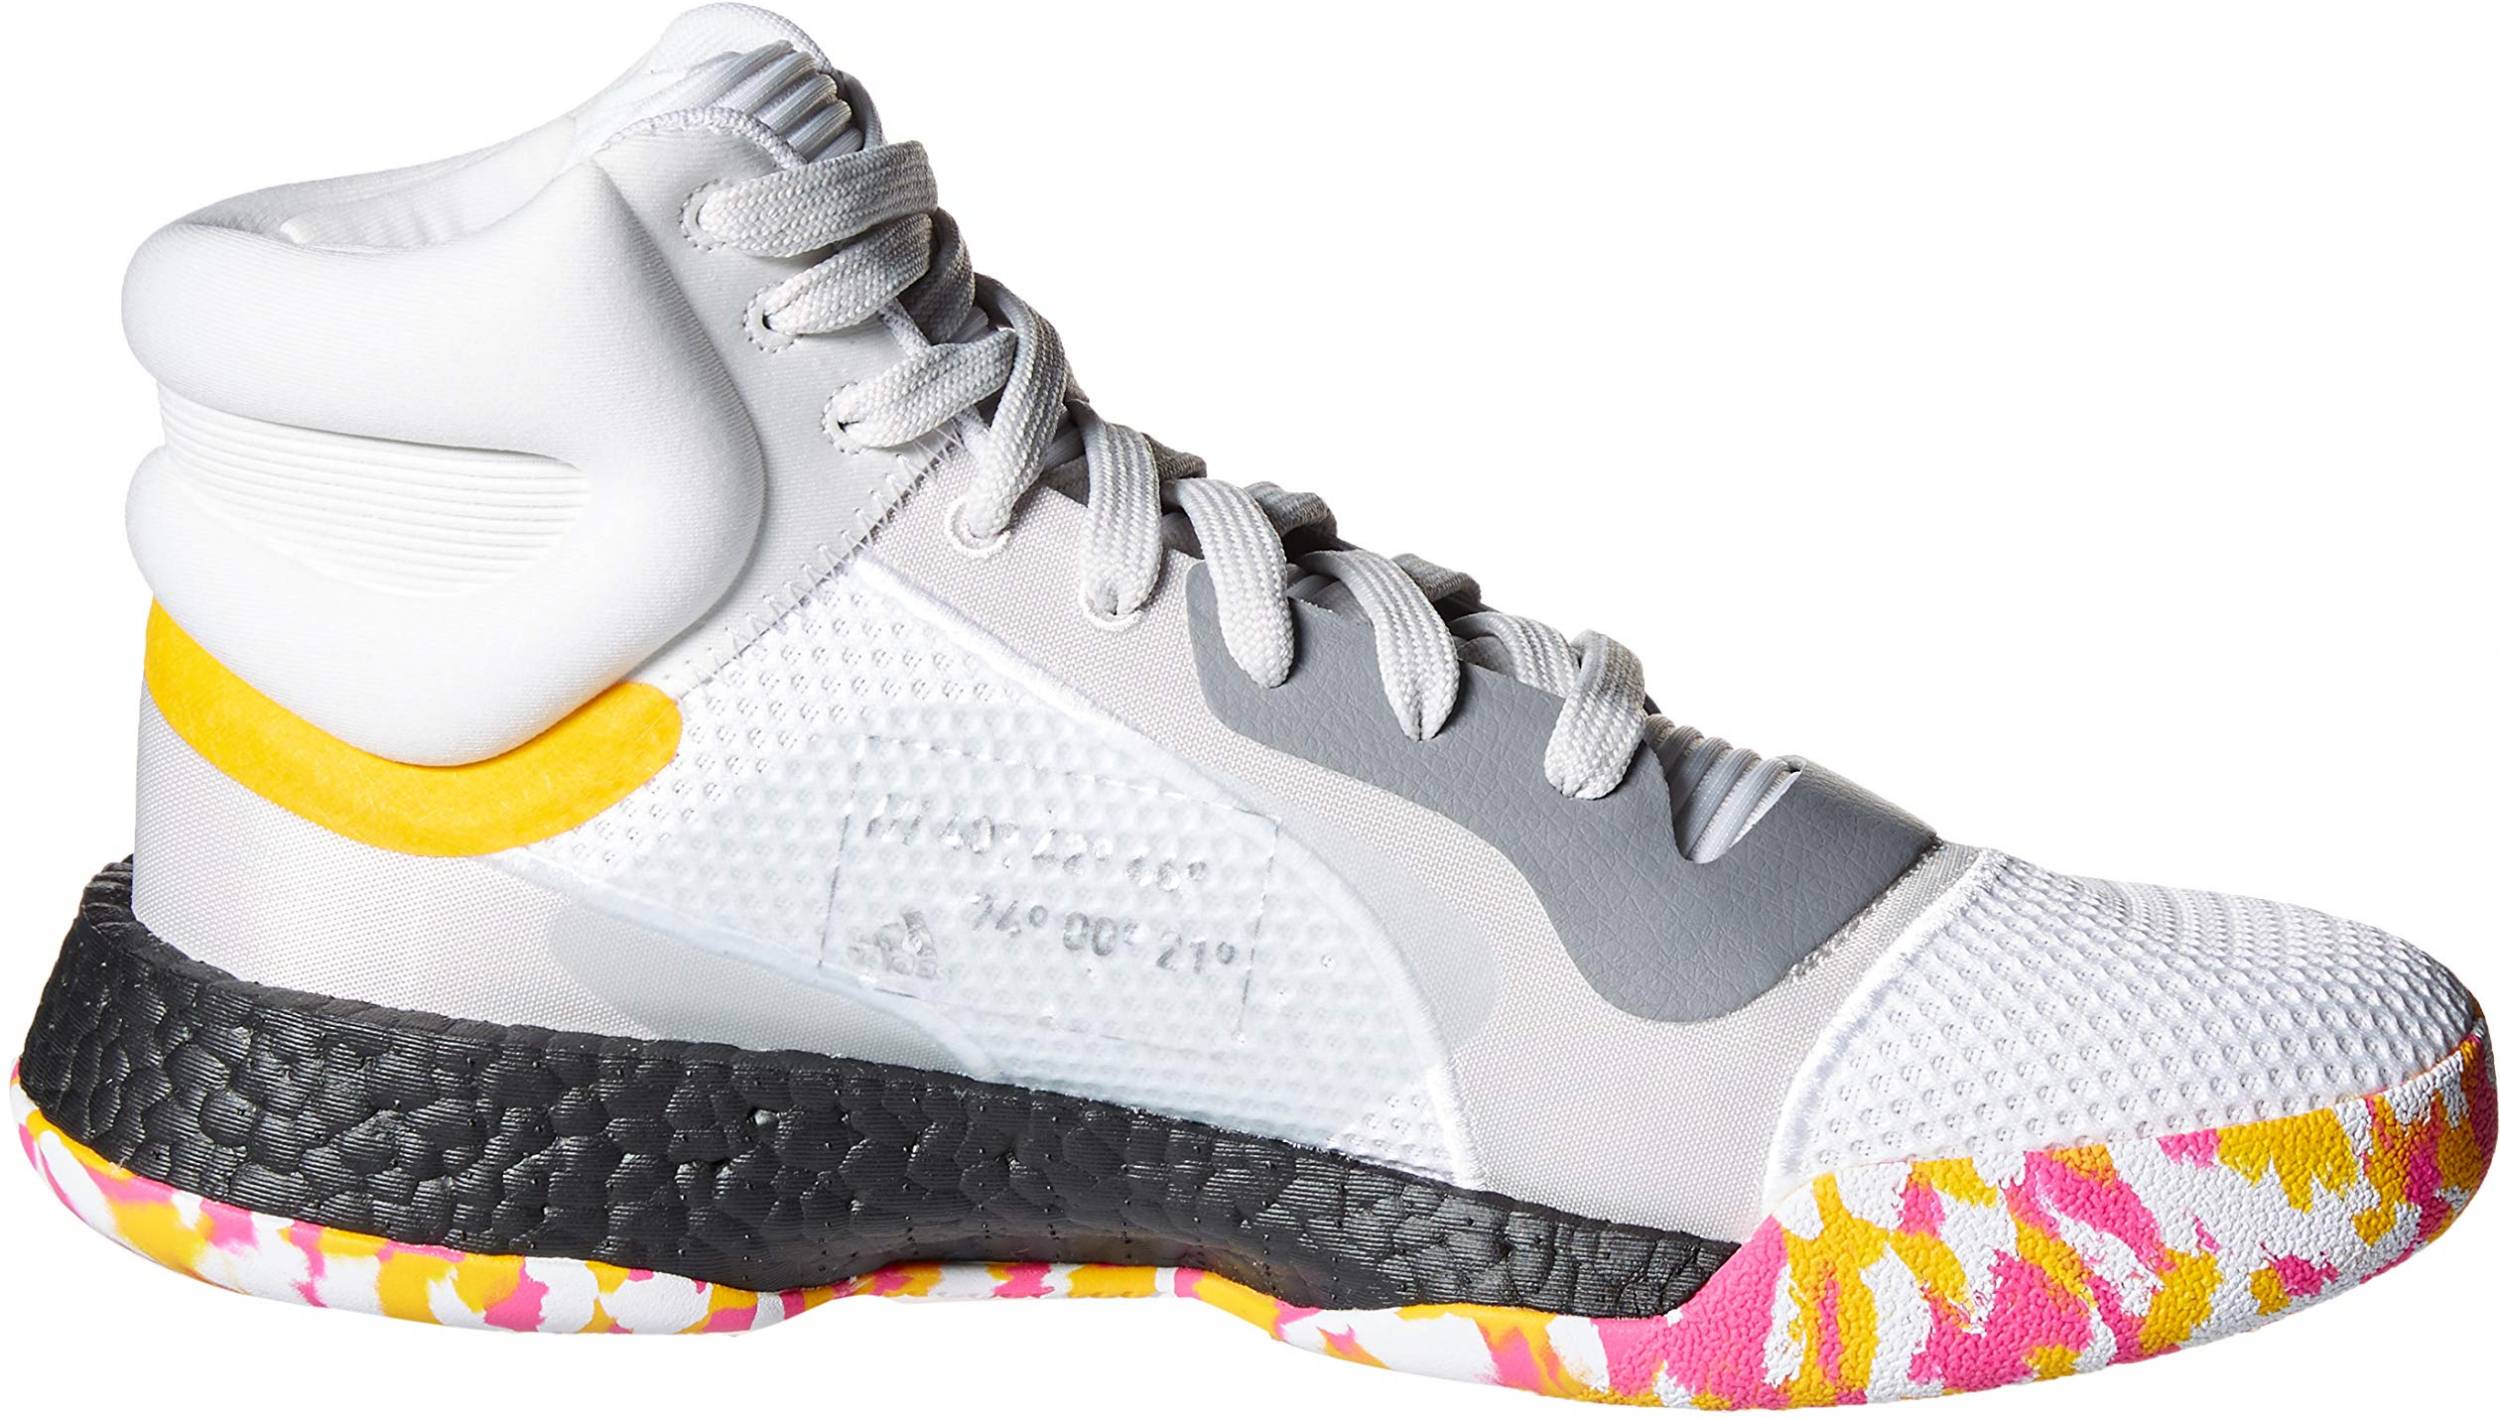 adidas Marquee Boost Shoe - Men's Basketball Off White/White/Dark